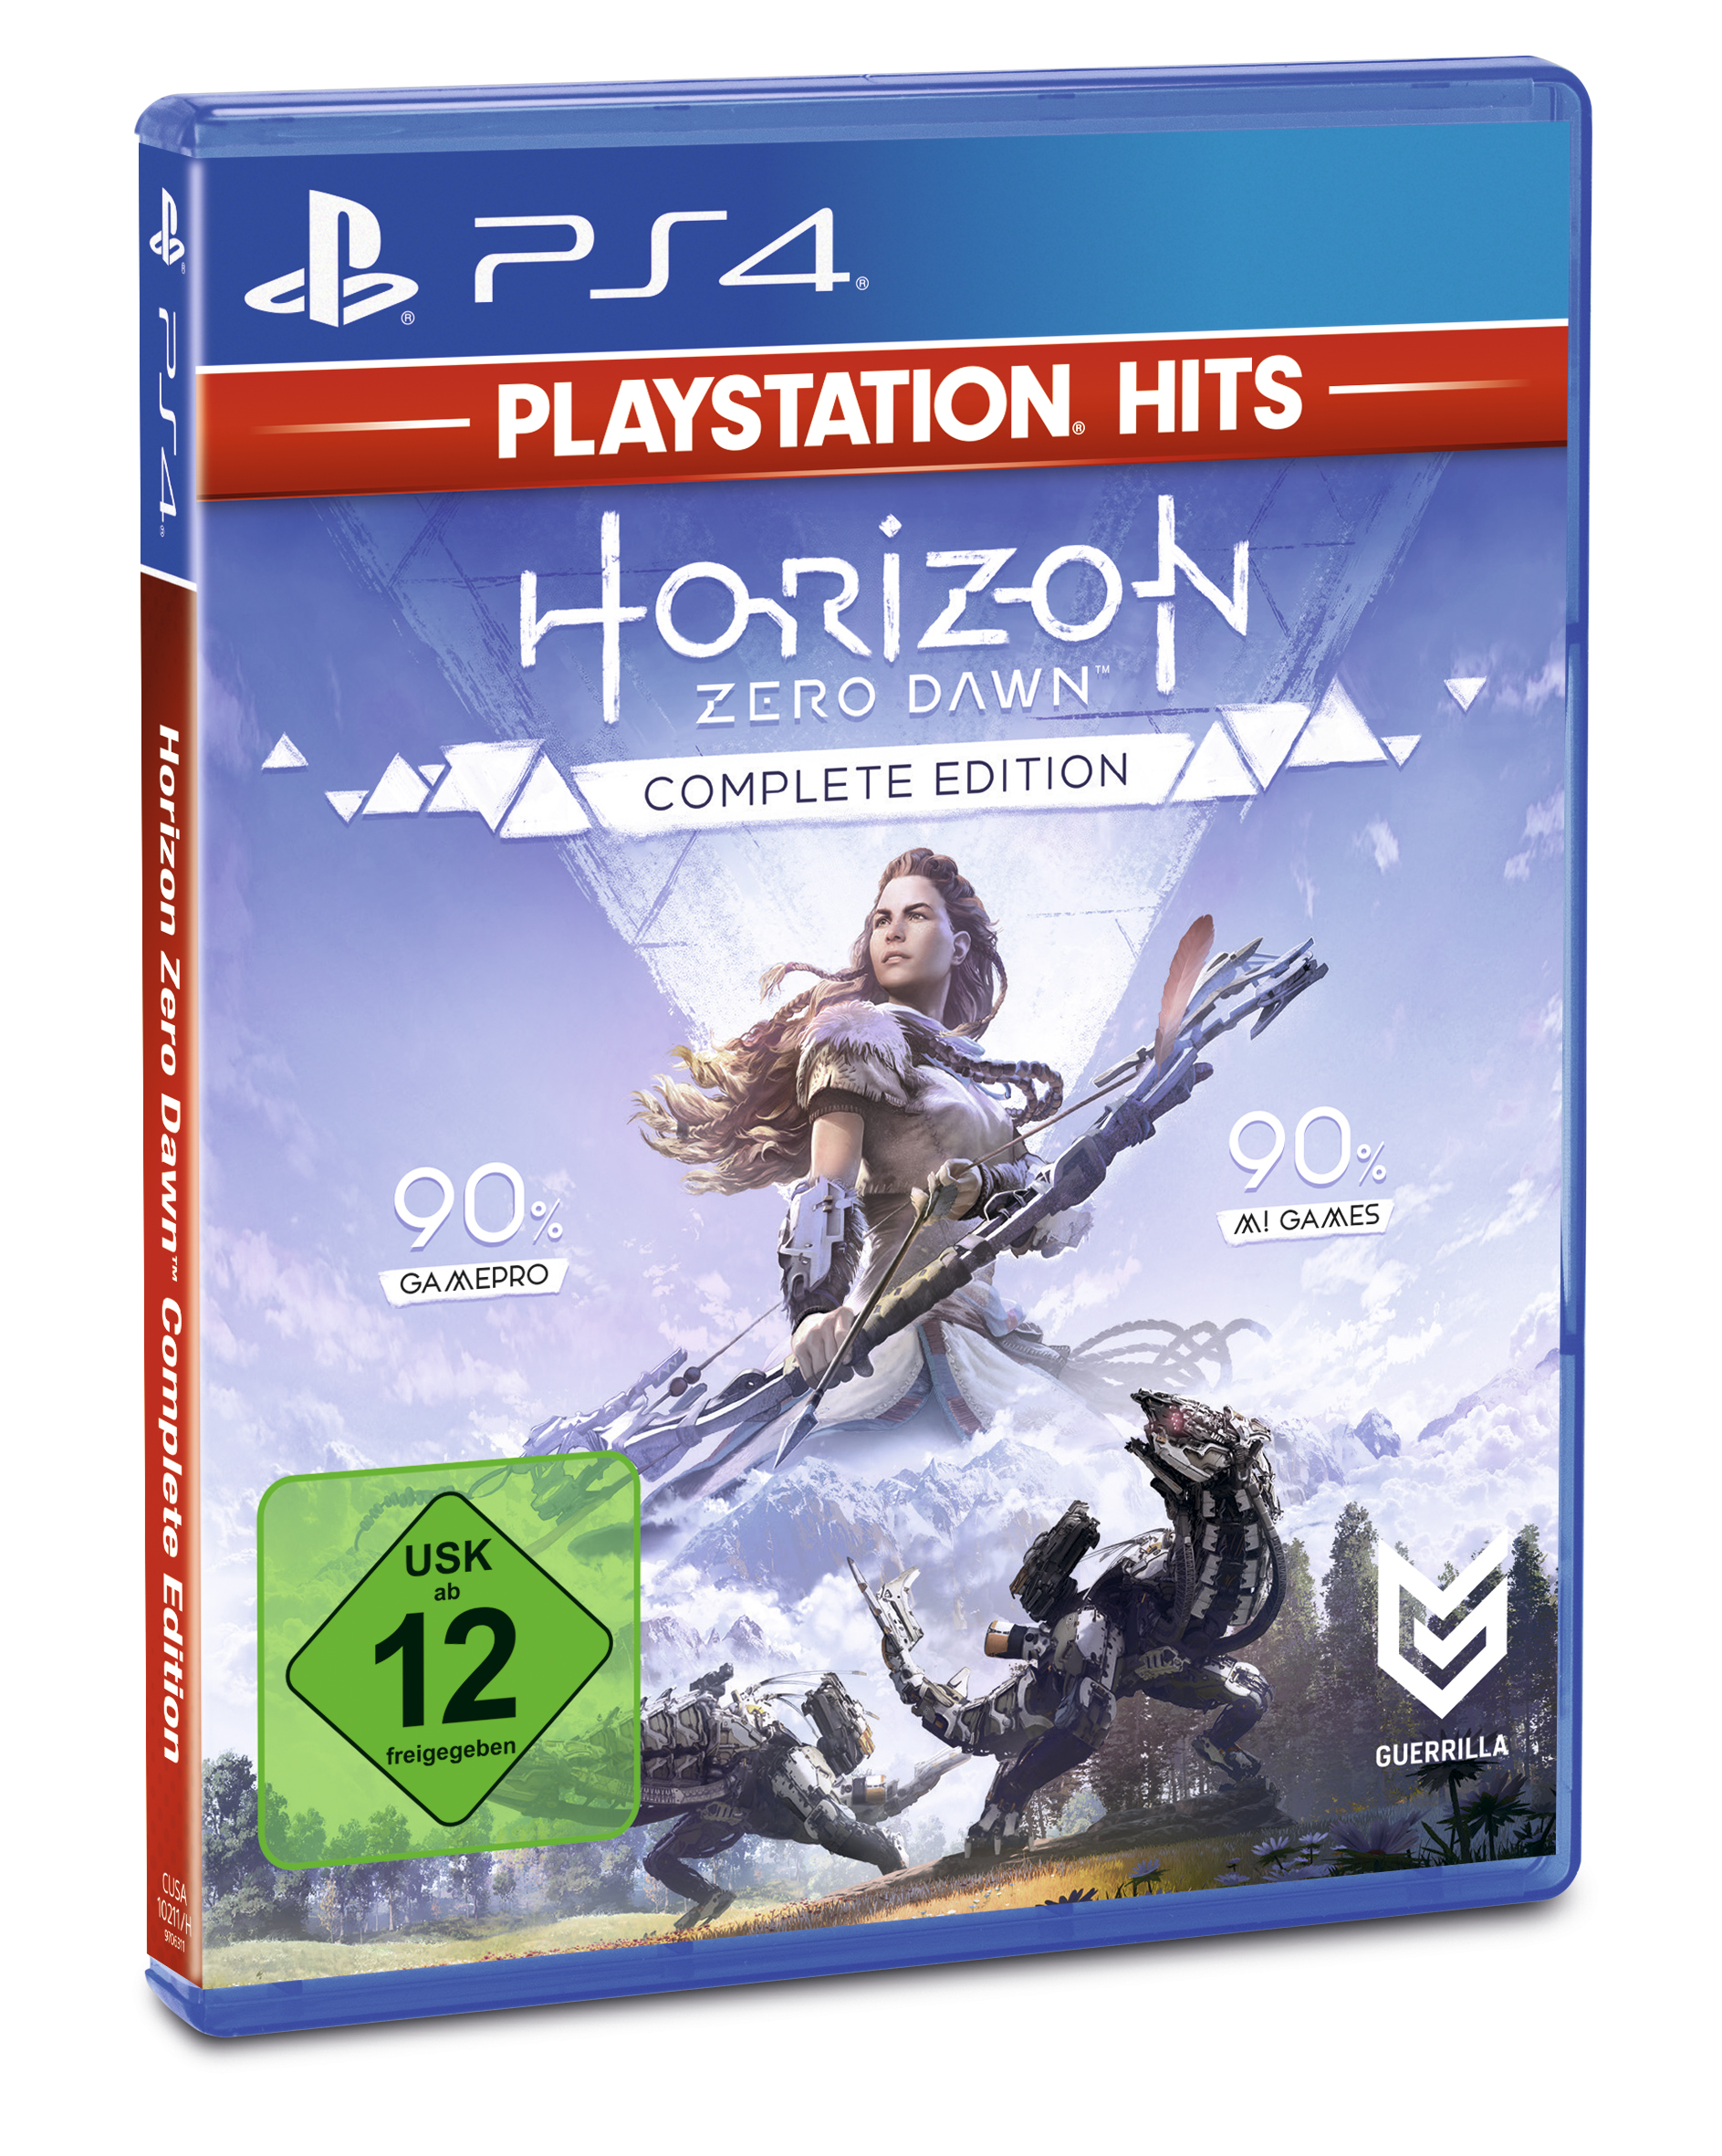 PlayStation Hits: Horizon Zero [PlayStation - Complete Edition 4] Dawn